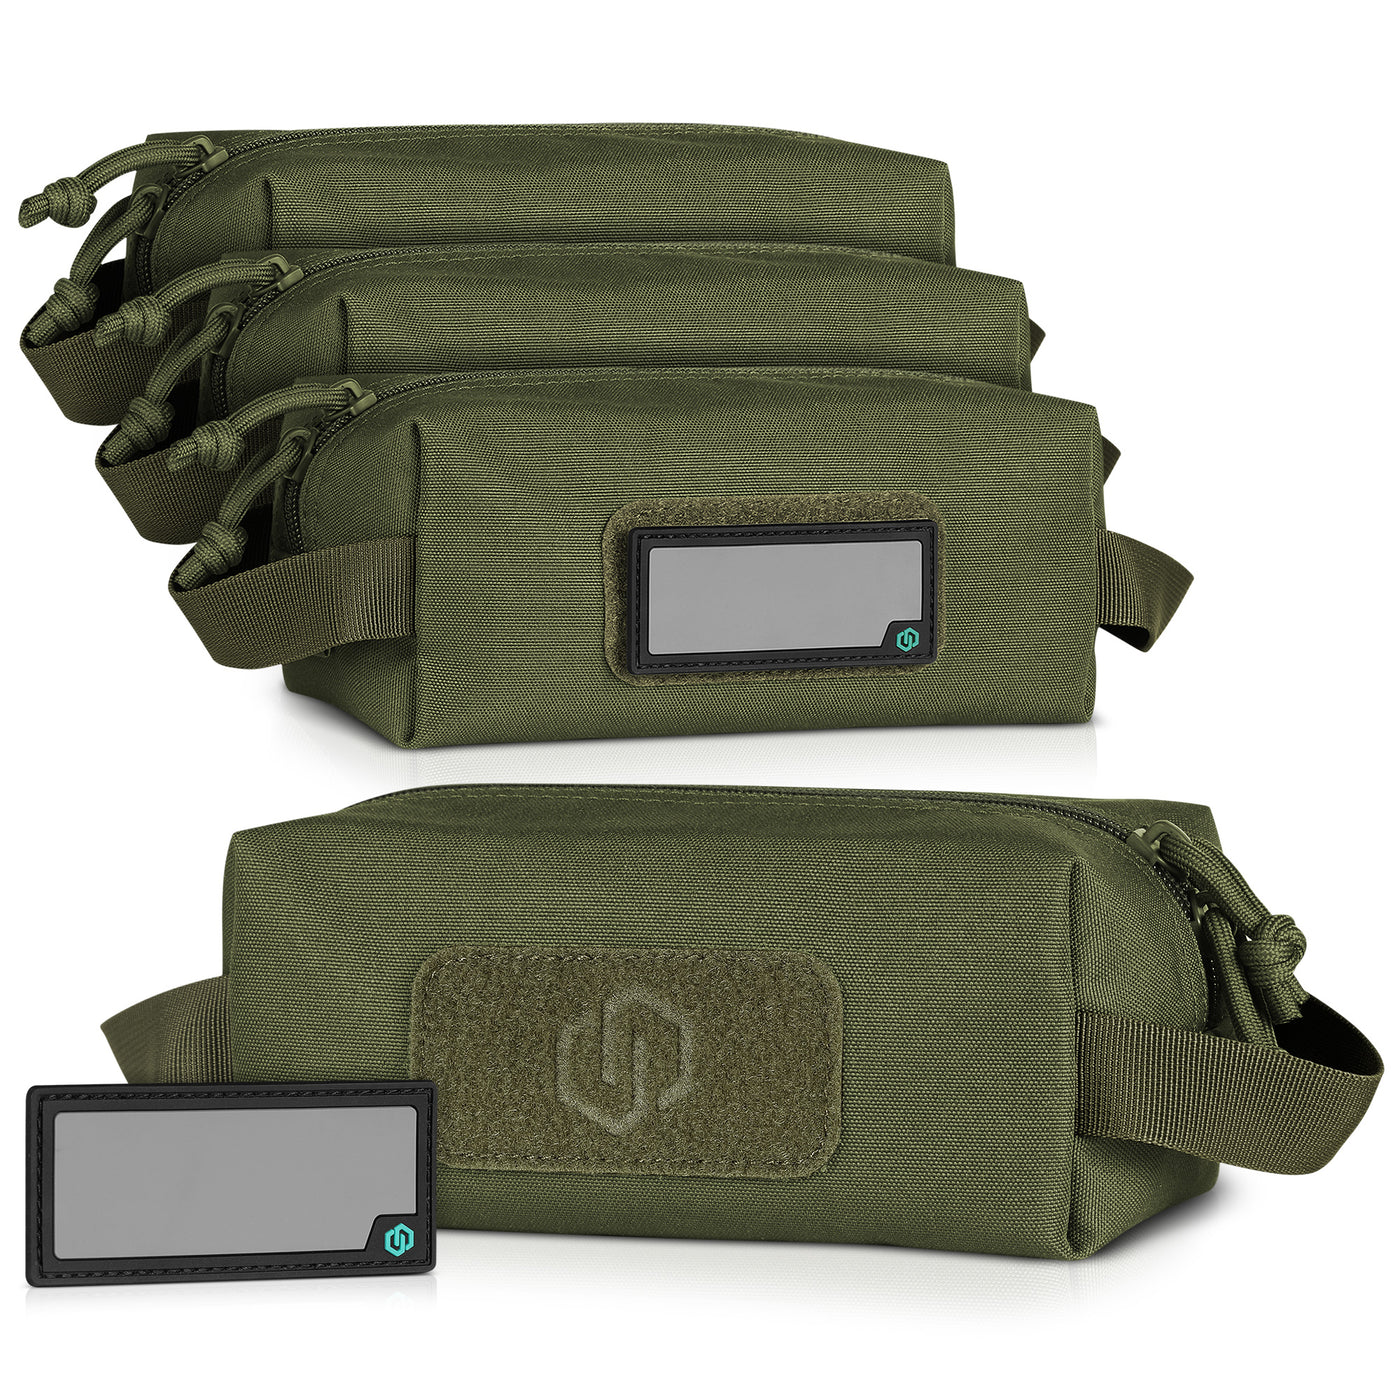 Loose Sac - Ammo Bag - Green - 4-Pack